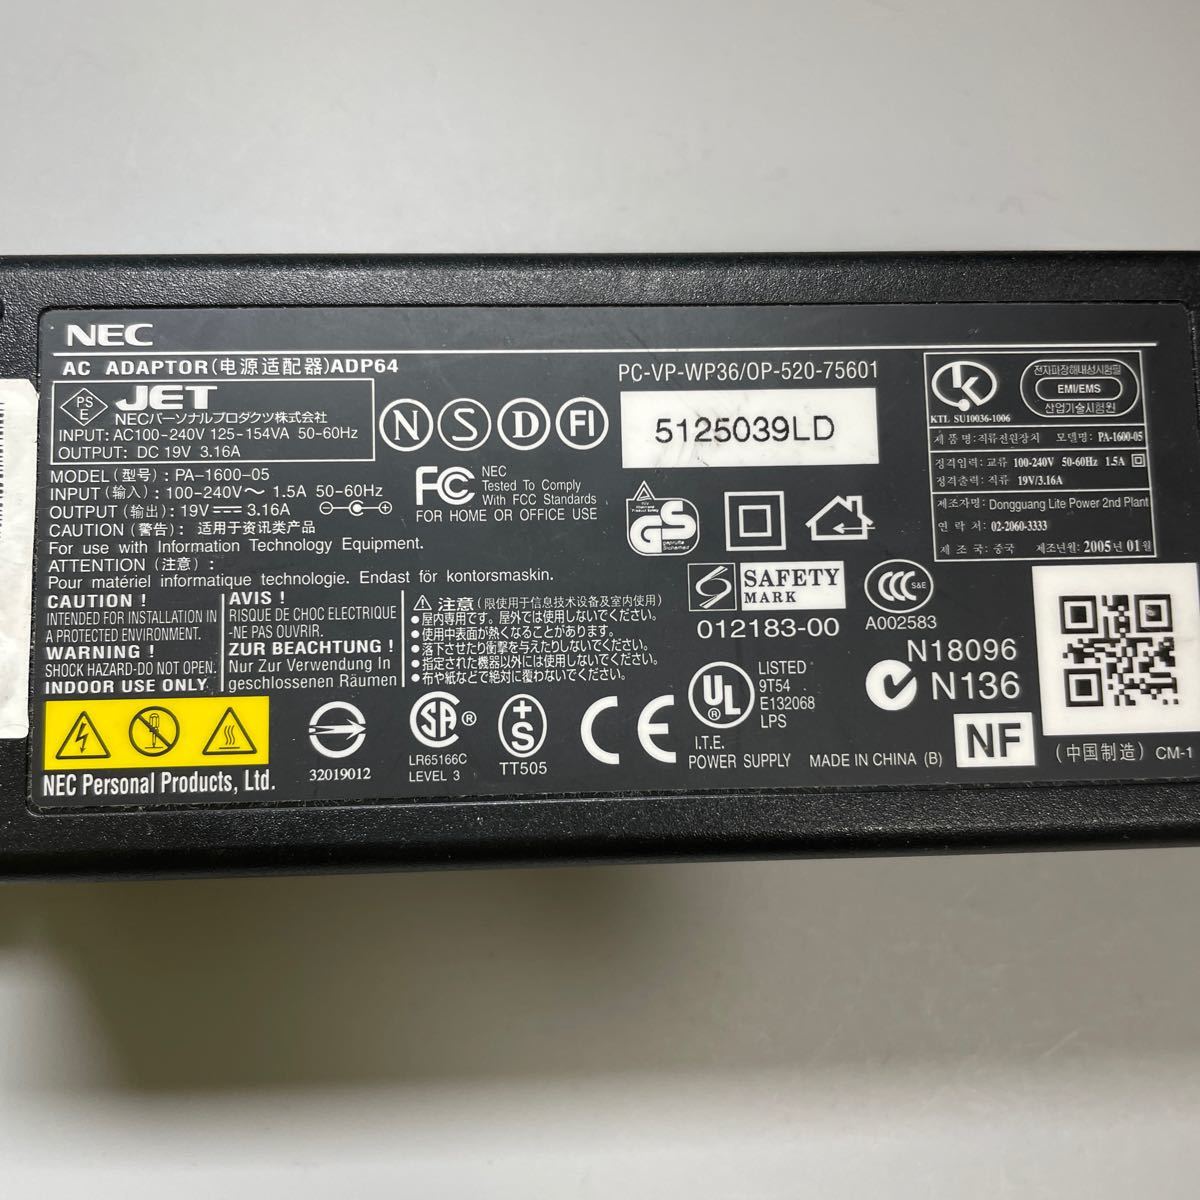 No.1670 NEC AC adaptor PA-1600-05 PC-VP-WP36 / OP-520-75601